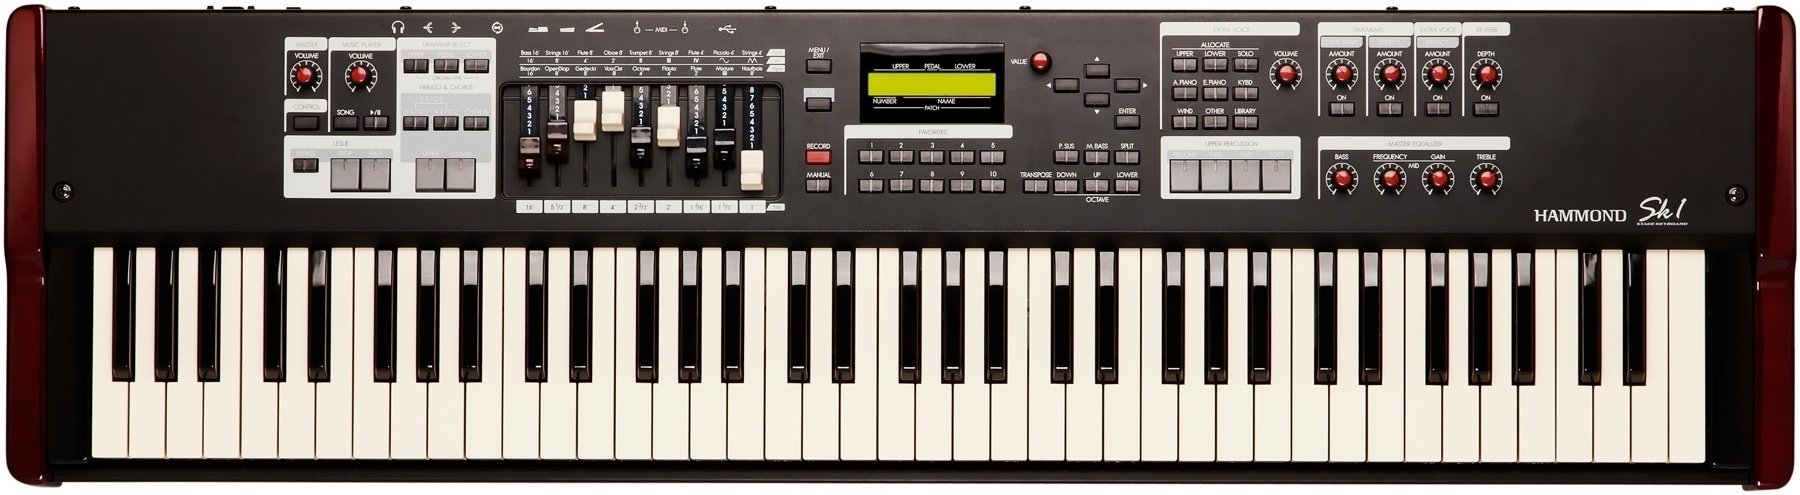 Elektronický organ Hammond SK1-73